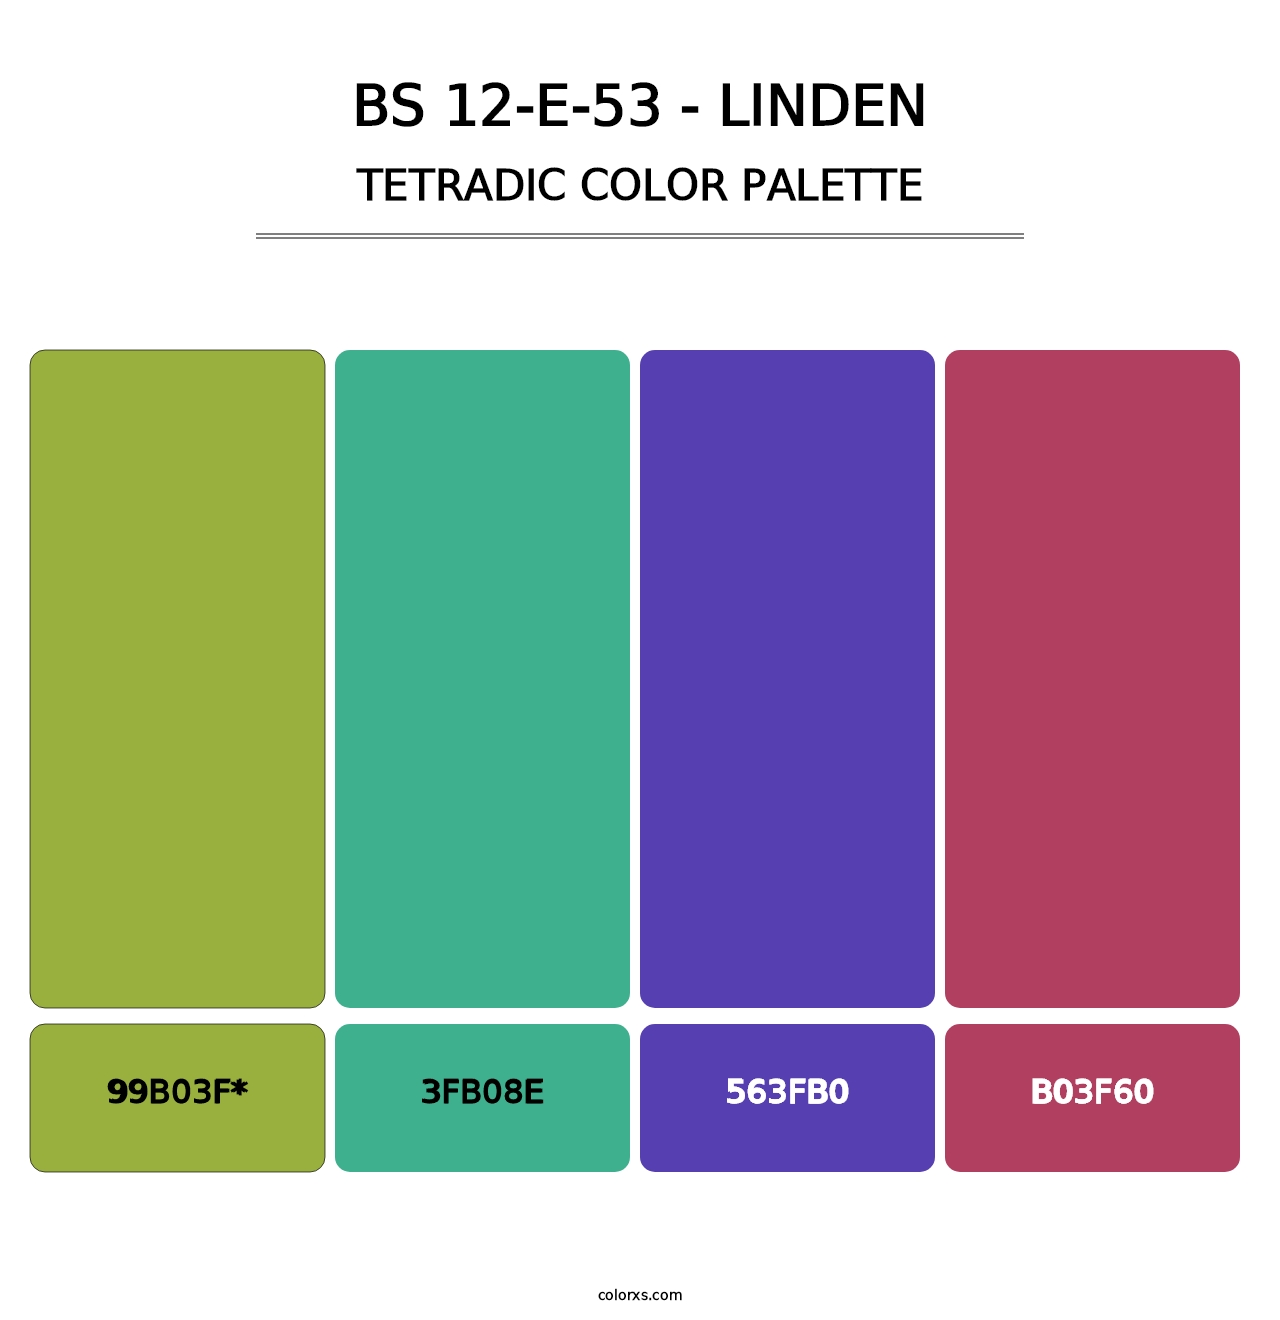 BS 12-E-53 - Linden - Tetradic Color Palette